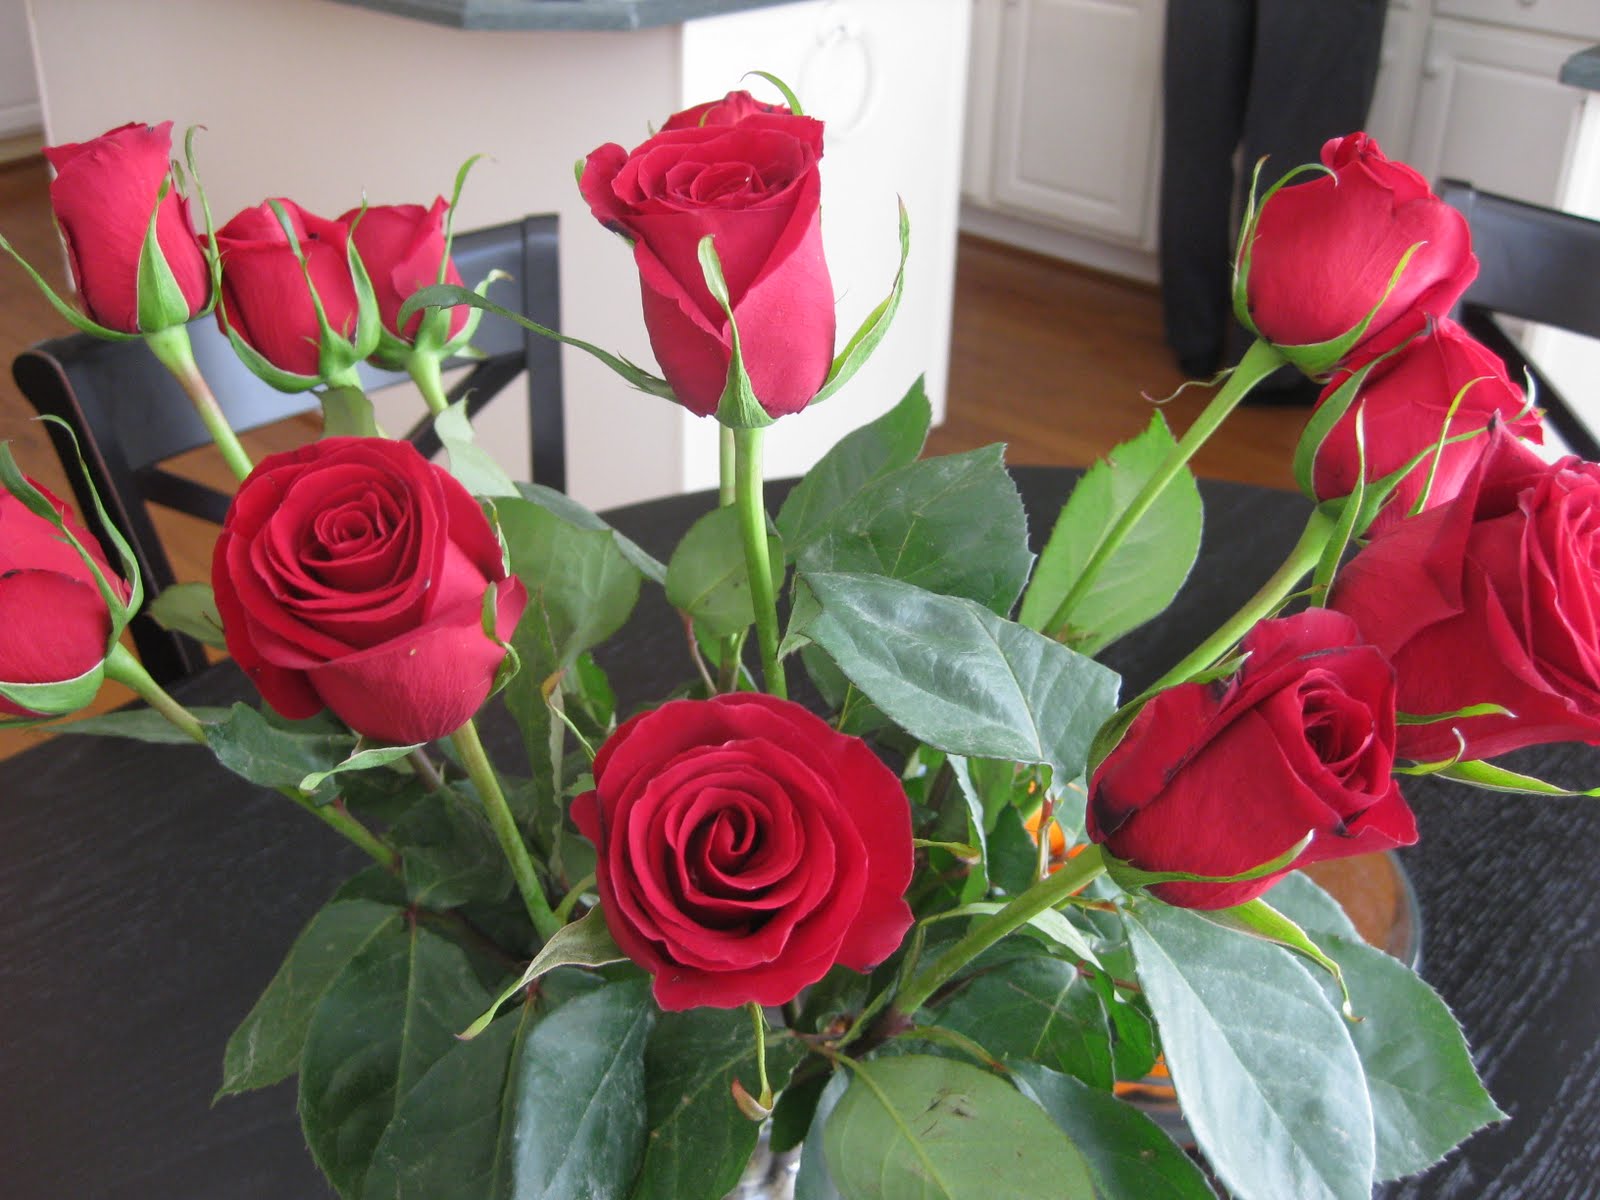 Shlepn Seven: Amazing roses